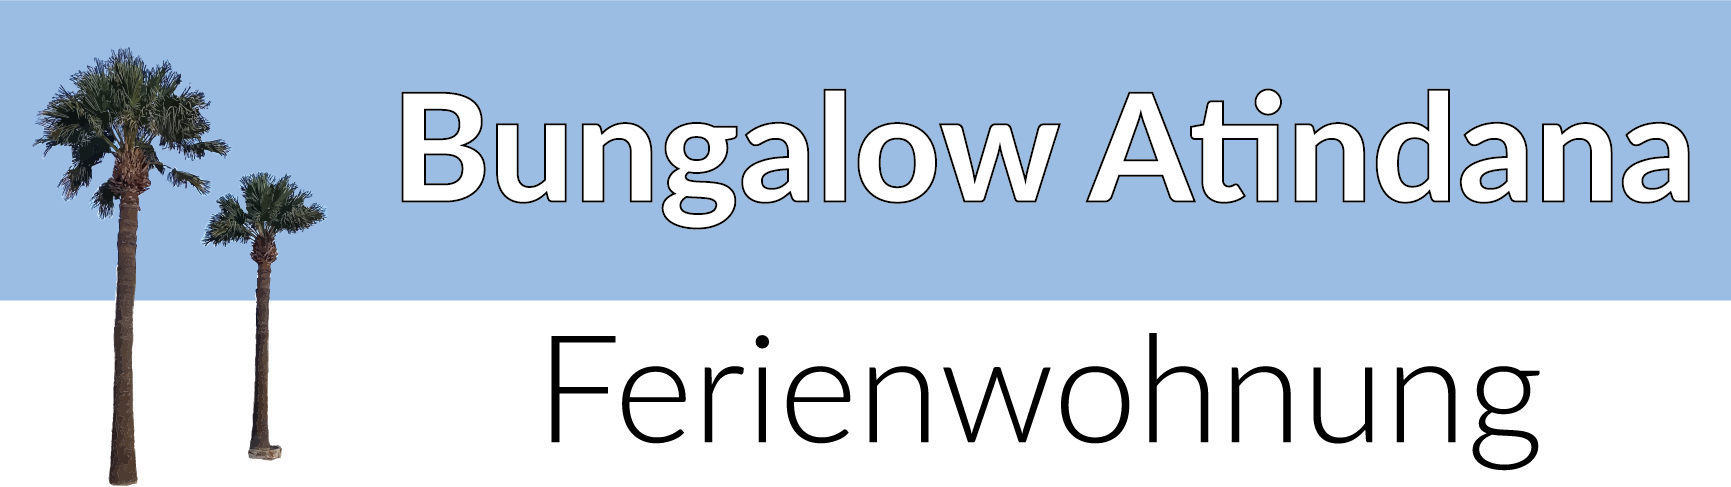 Logo - Bungalow Atindana